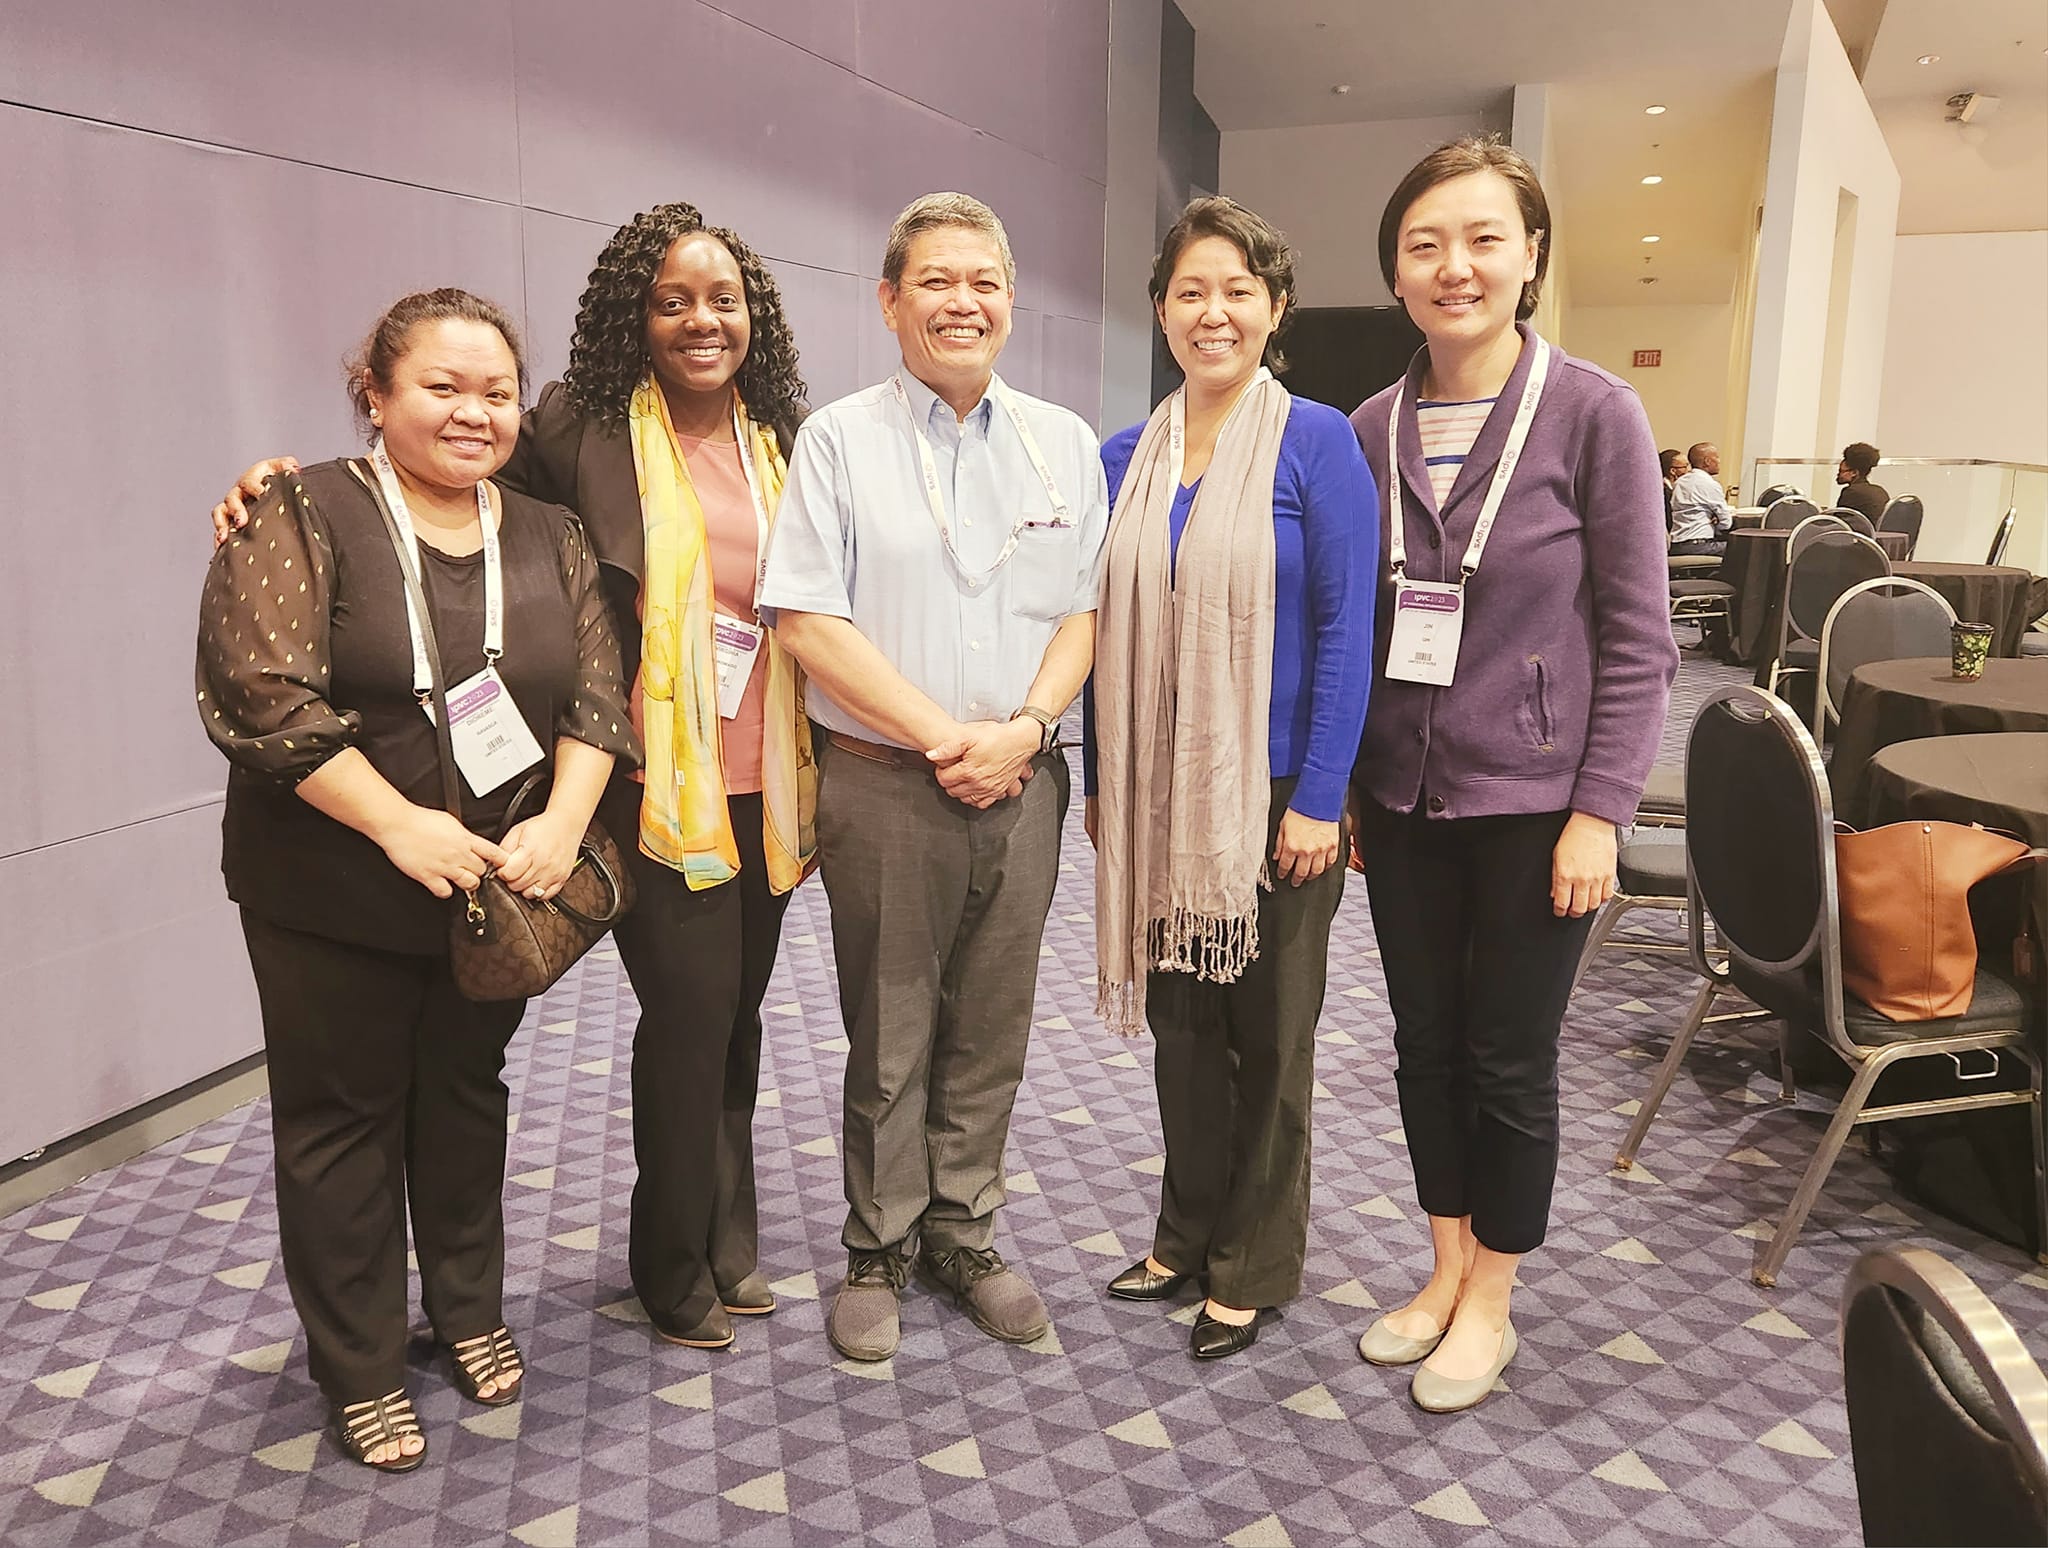 PACe Team at the 2023 IPVC Meeting in Washington, DC (Left to Right: Dioreme Navasca, Dr. Senkomago, Dr. Lu, Mavis Nitta, Dr. Qin)